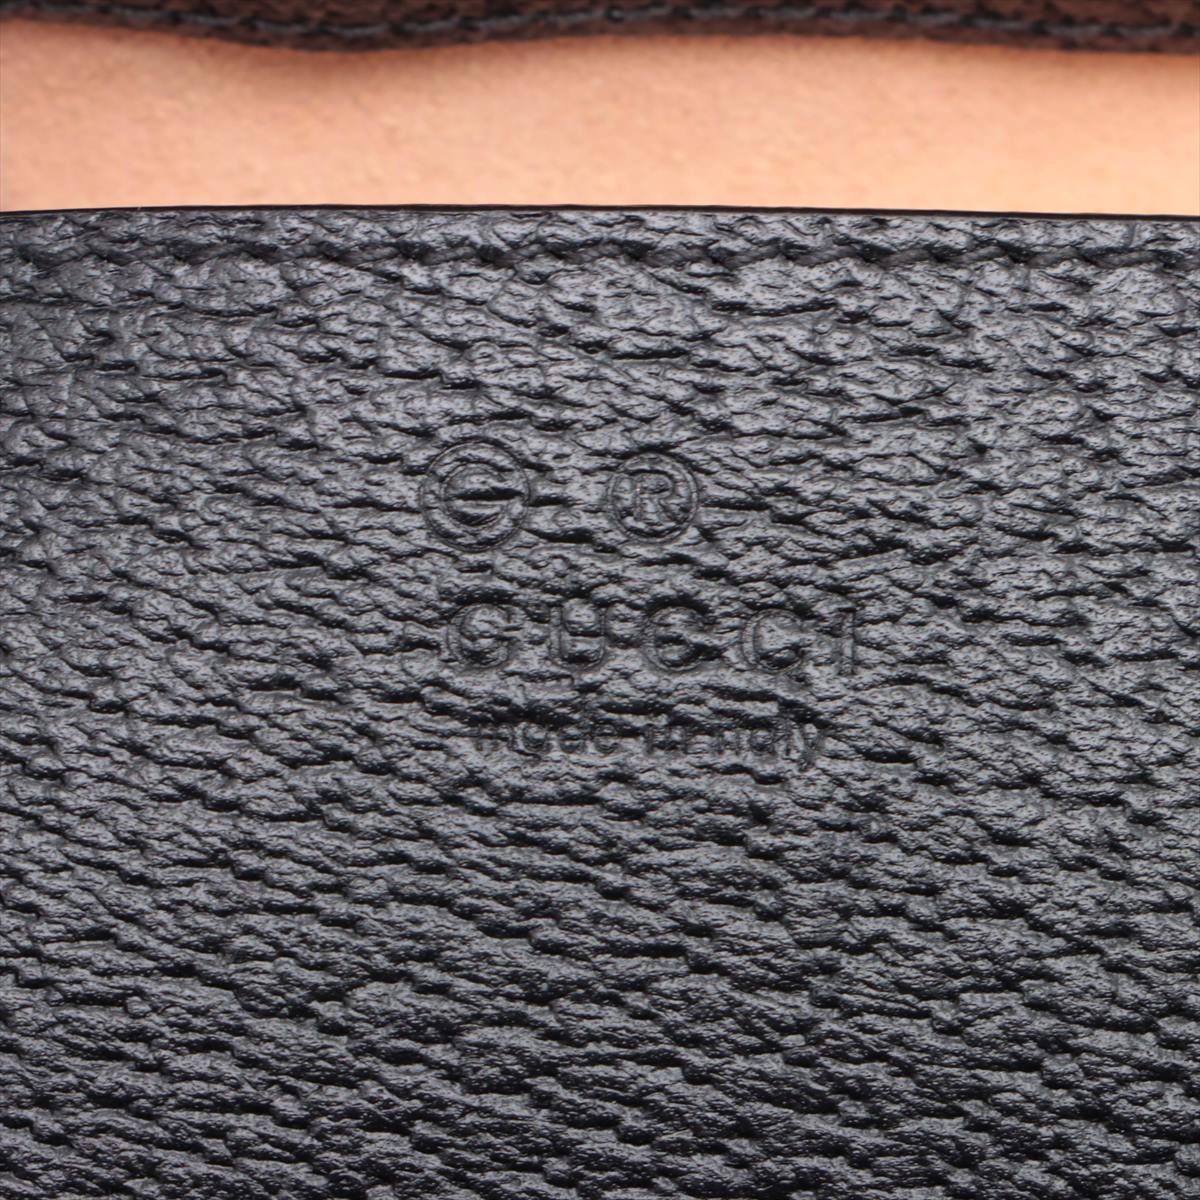 Gucci Ophidia Leather 2WAY Handbag Black 719882